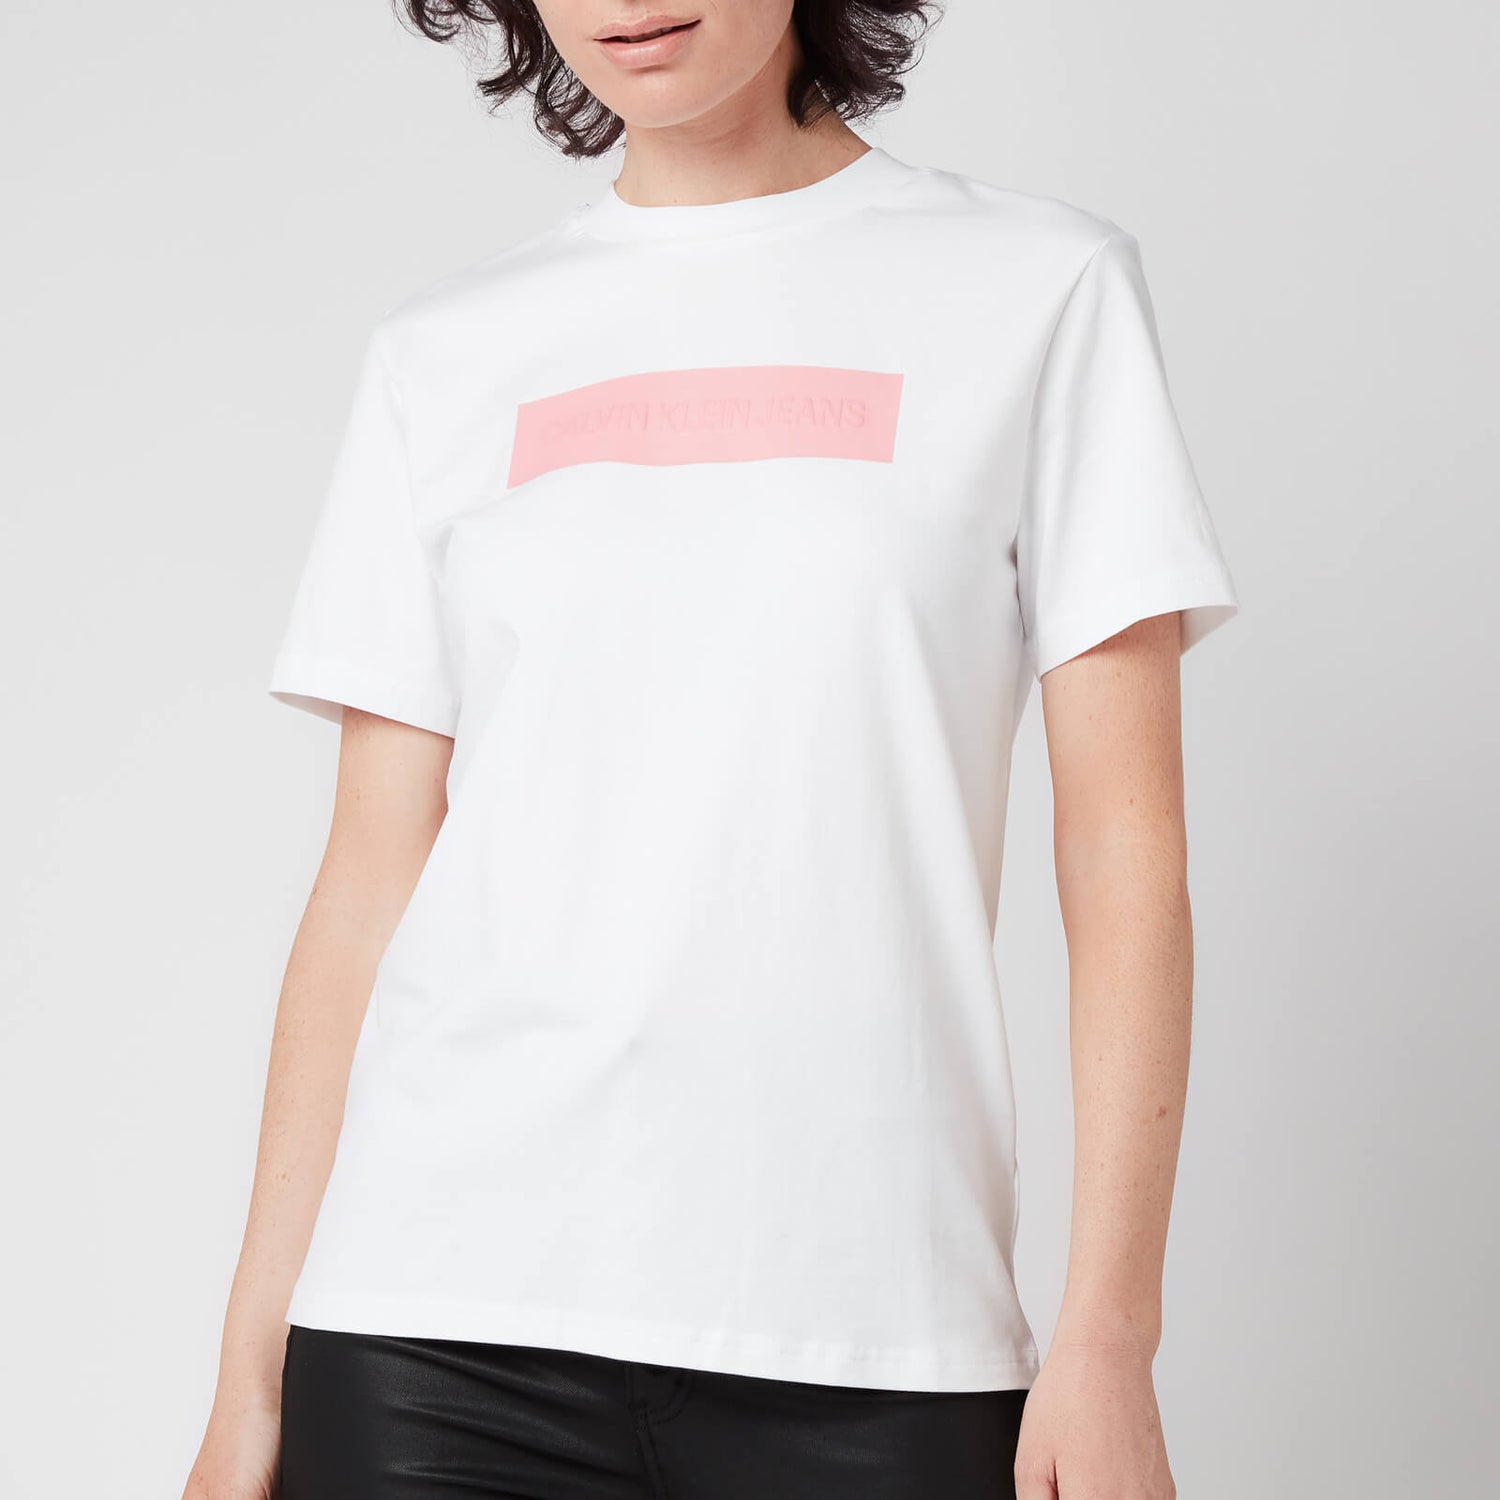 Calvin Klein Jeans Women's Hero Logo T-Shirt - Bright White/Soft Berry